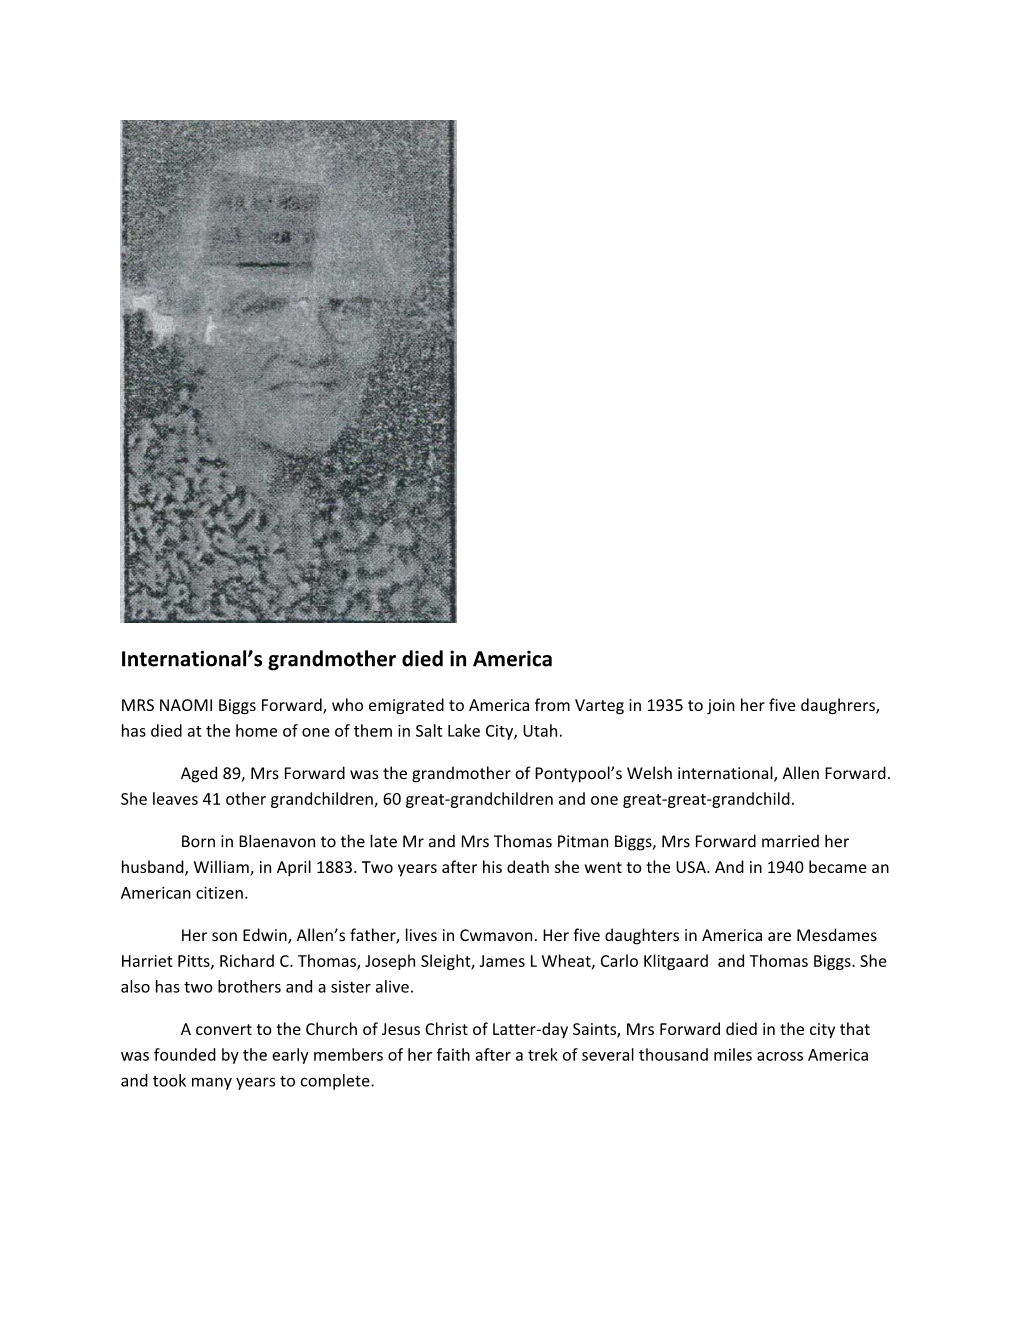 International's Grandmother Died in America